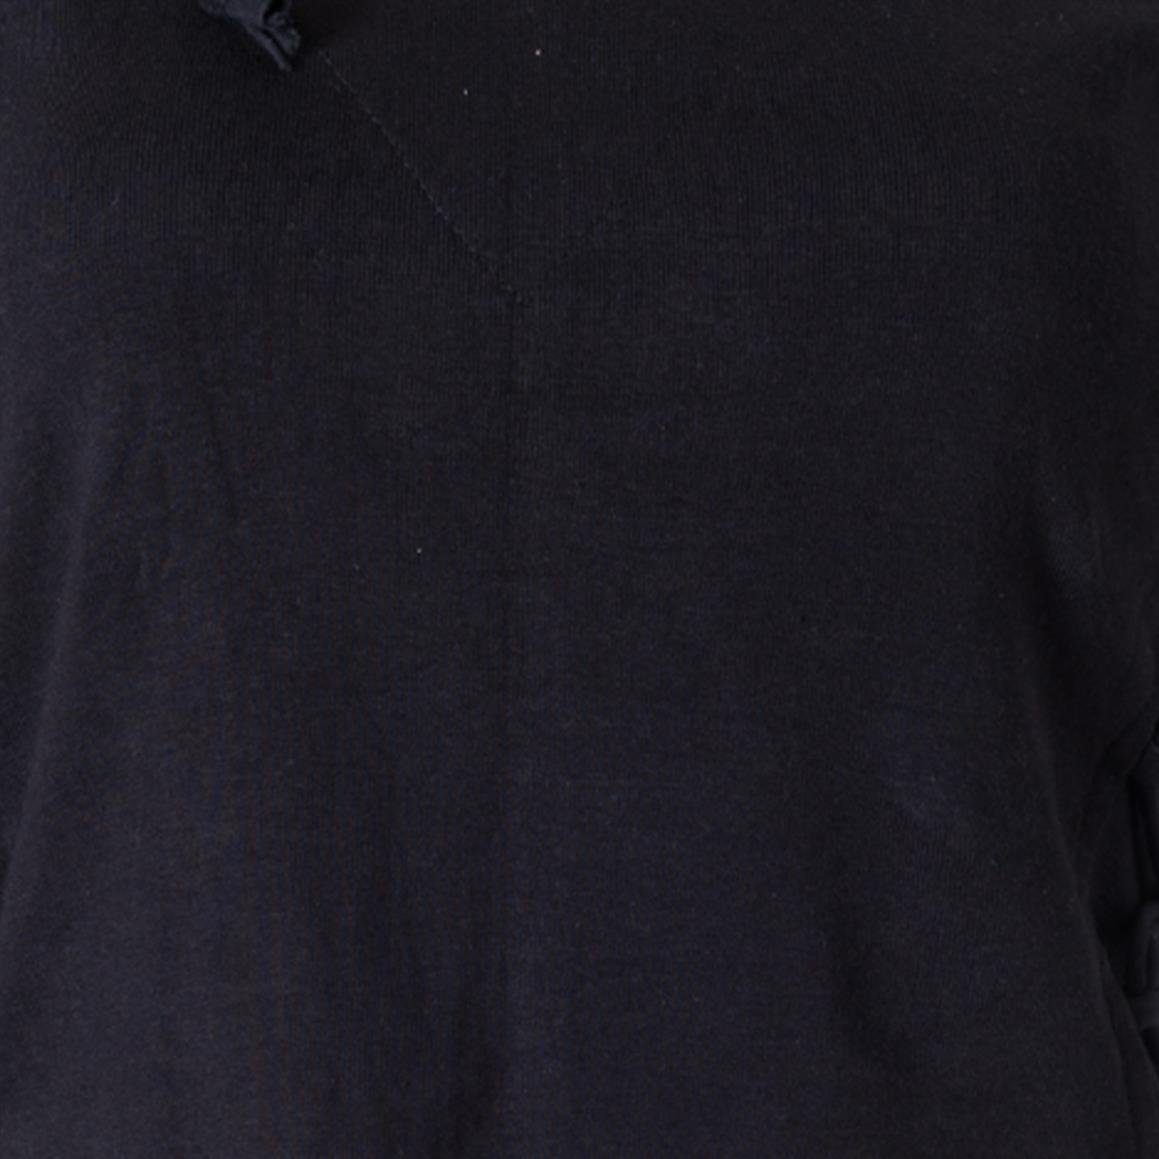 Vishes Kapuzenshirt zum Hoody, Schnüren Zipfelkapuze und Gothik schwarz Ethno, Bändern Elfenshirt Style